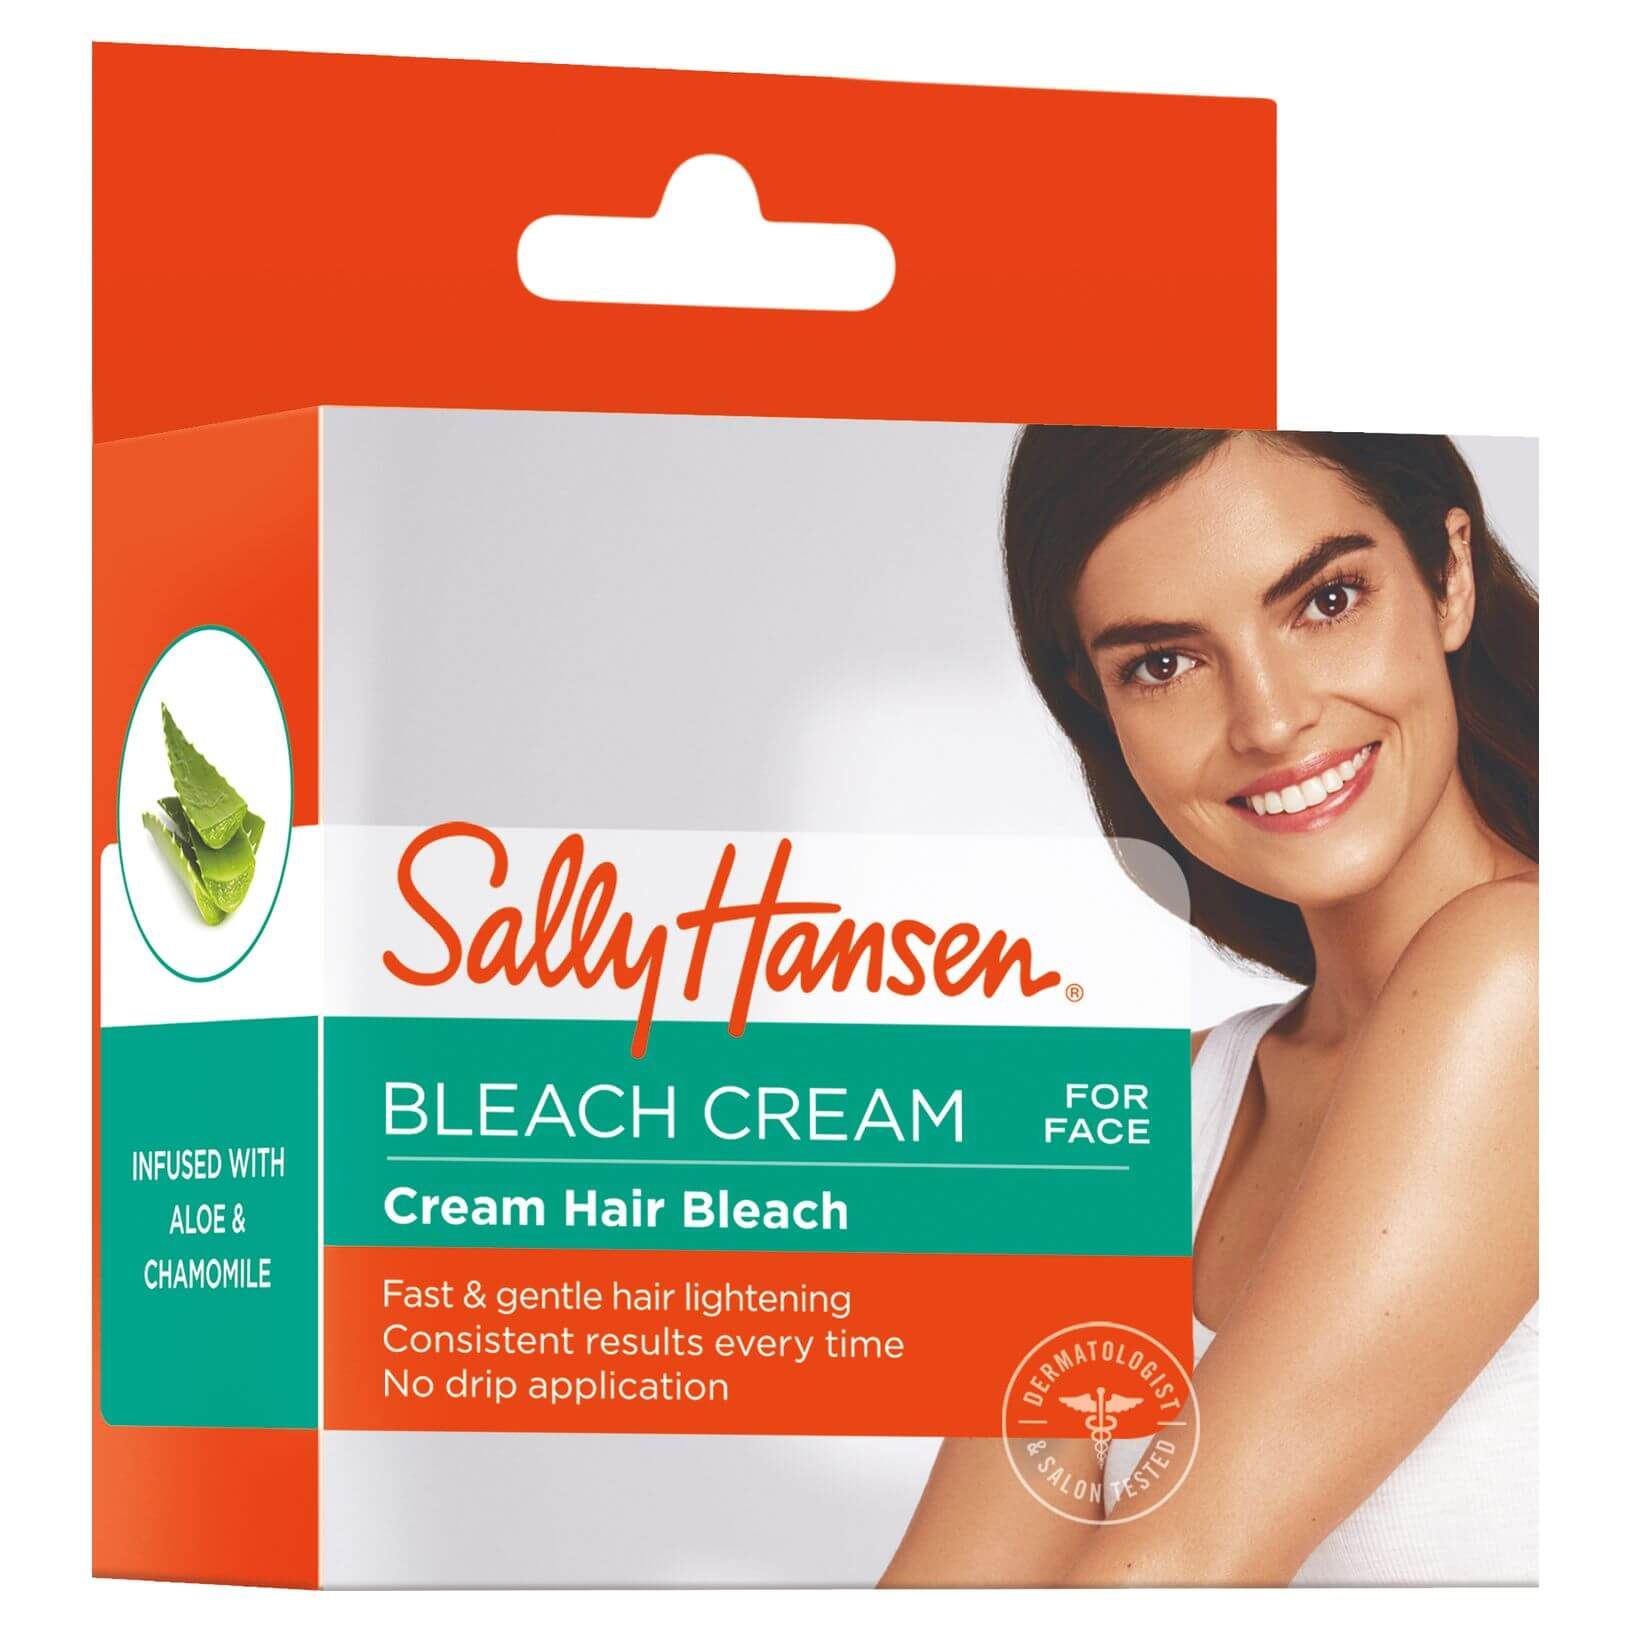 Extra Strength Crème Hair Bleach - For Face & Body | Sally Hansen